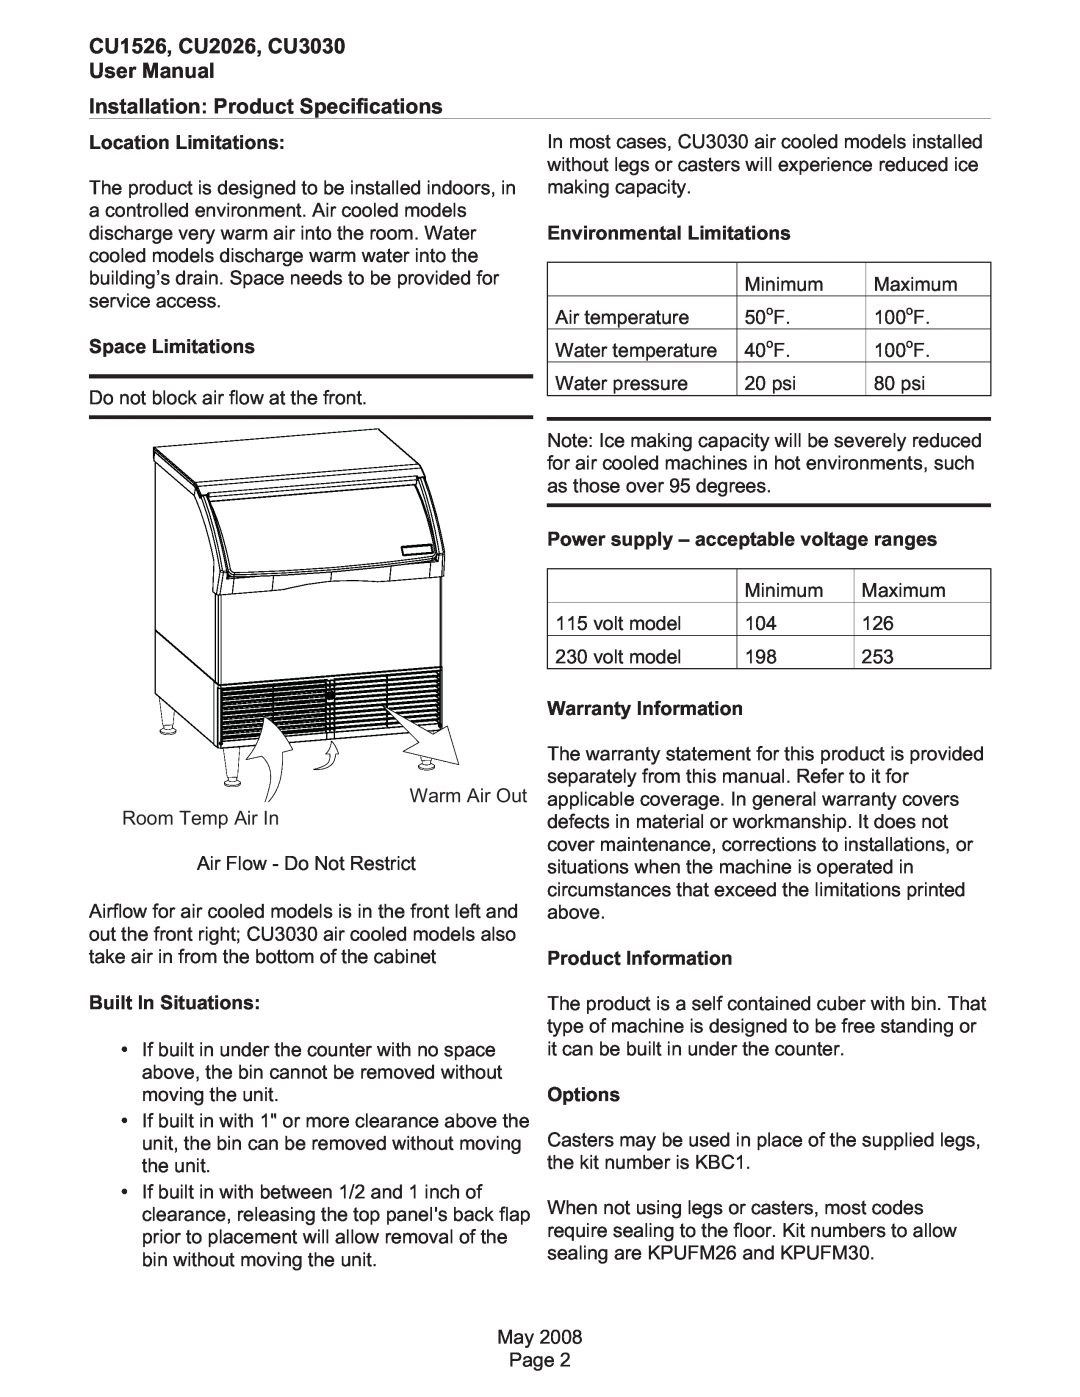 Scotsman Ice CU1526, CU2026, CU3030 User Manual, Installation Product Specifications, Location Limitations, Options 